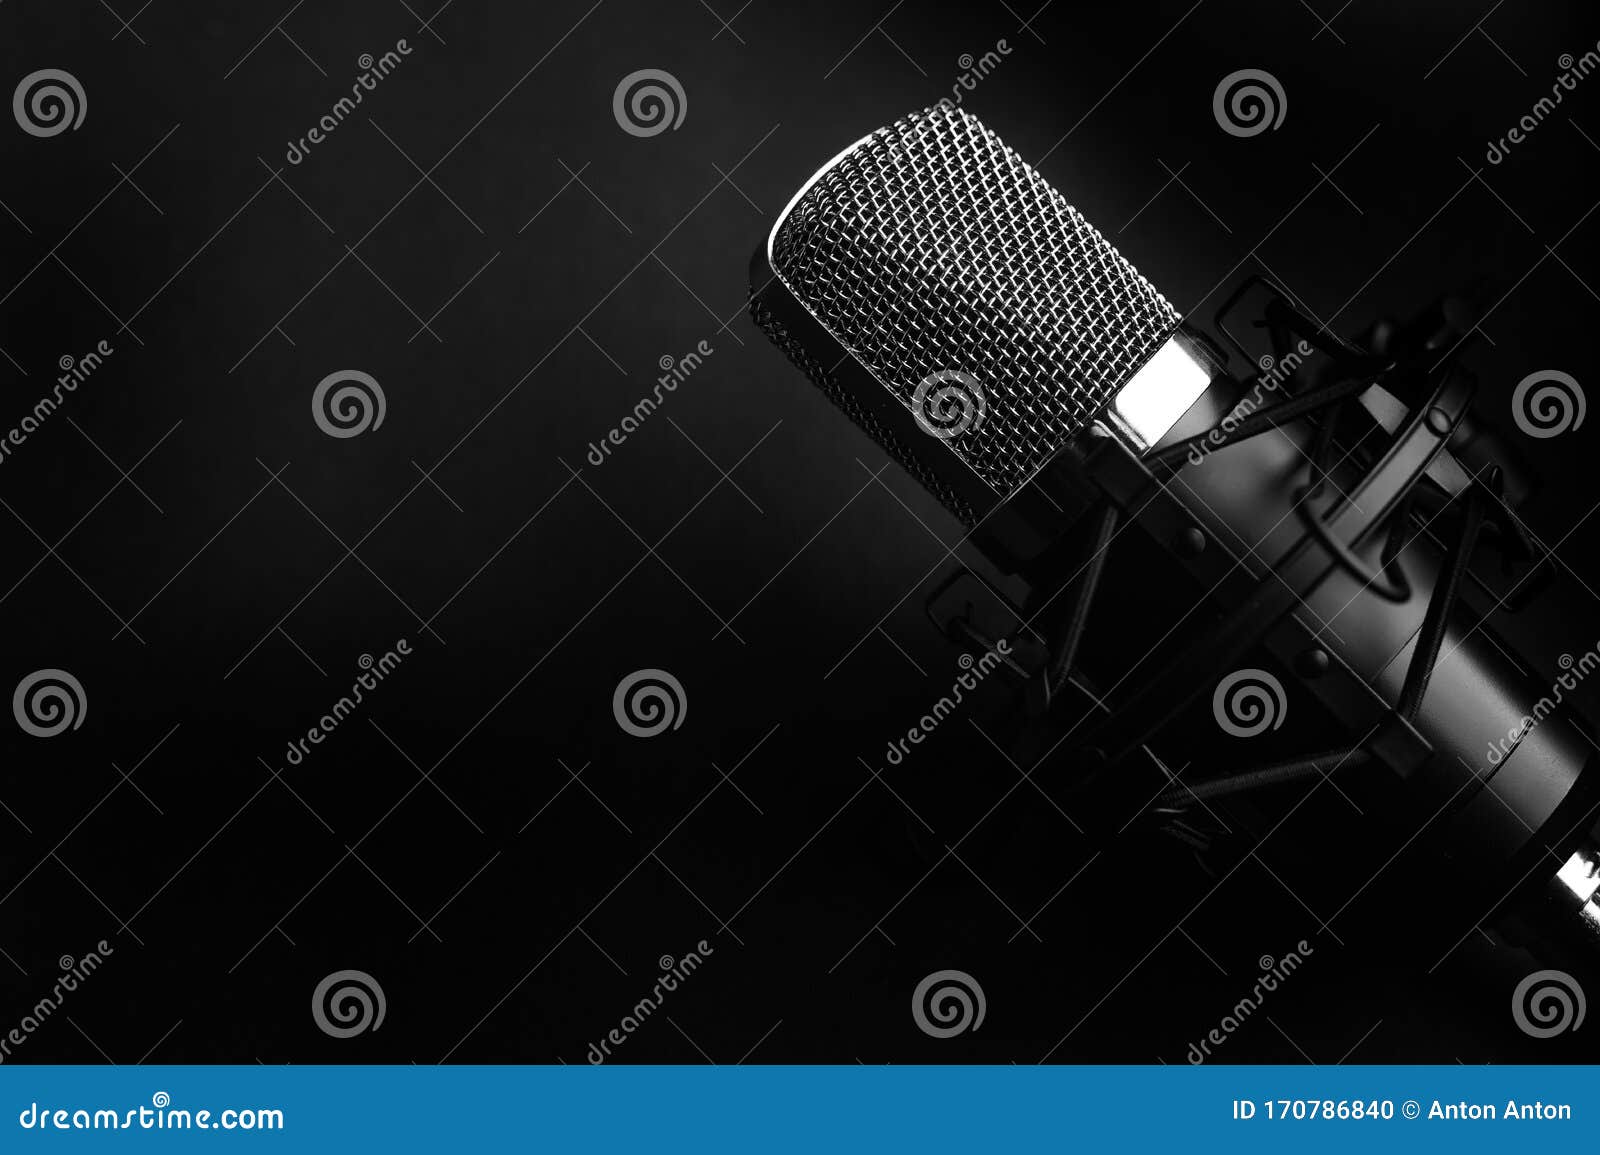 condenser black studio microphone on a black background. streamer, podcasts, music background